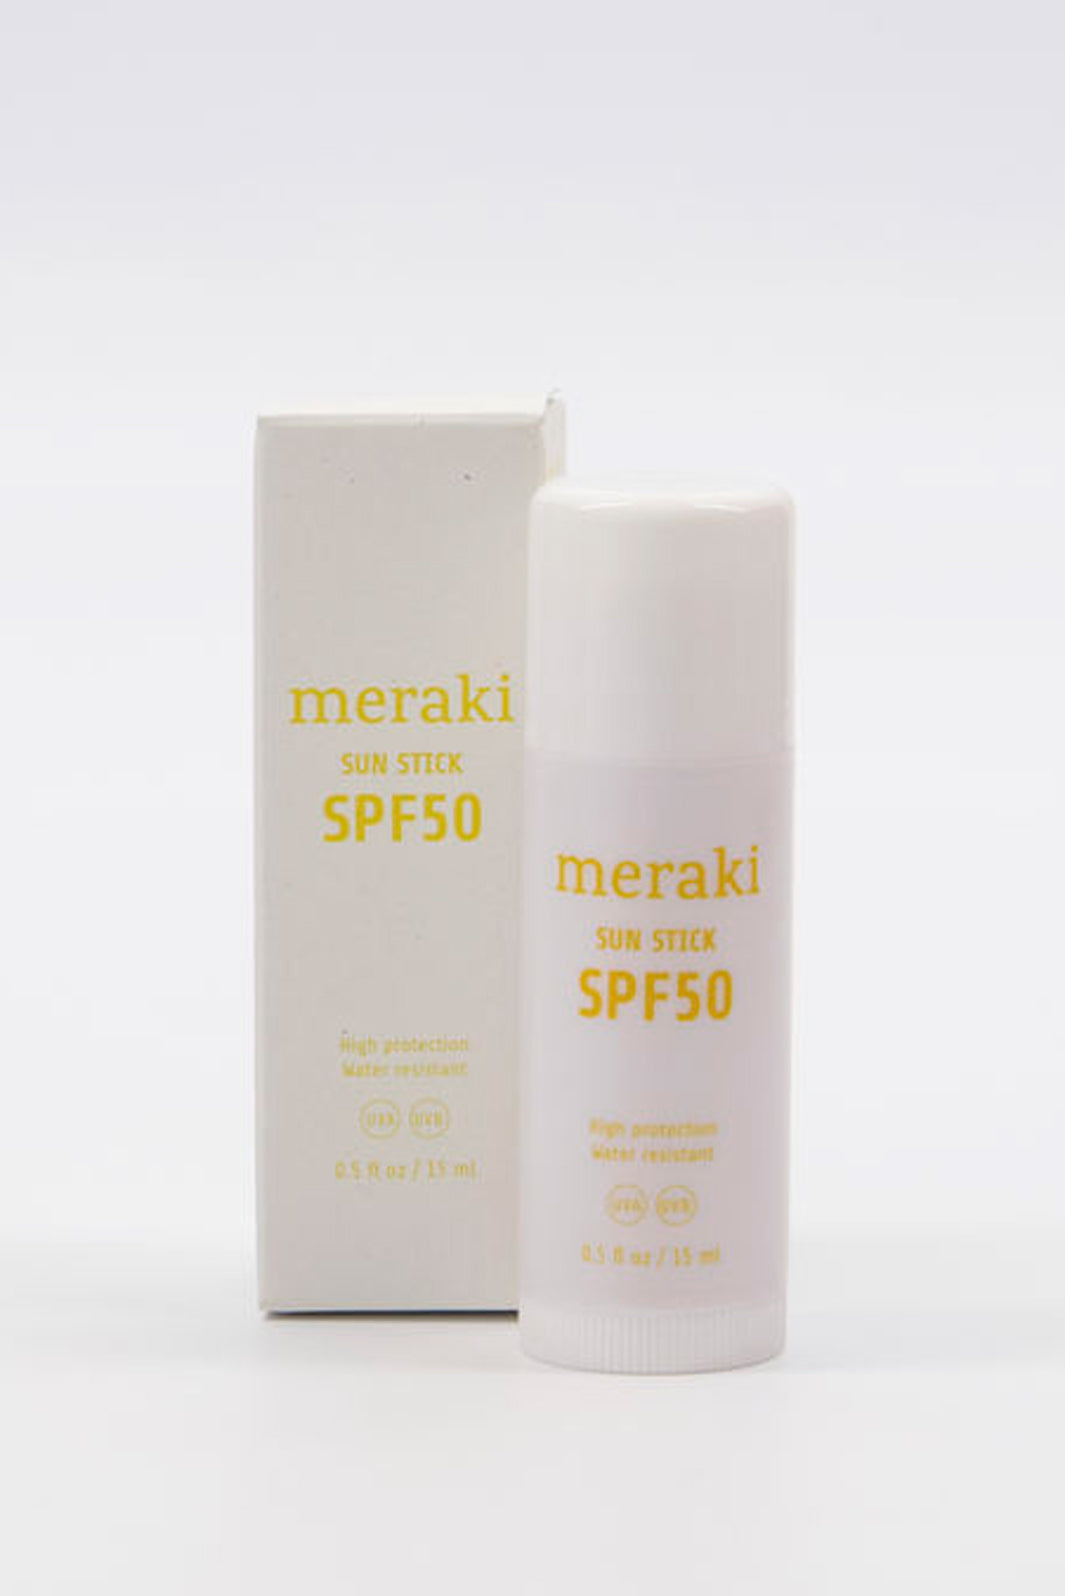 Meraki - Sun Stick spf50 - 18 ml Creme 